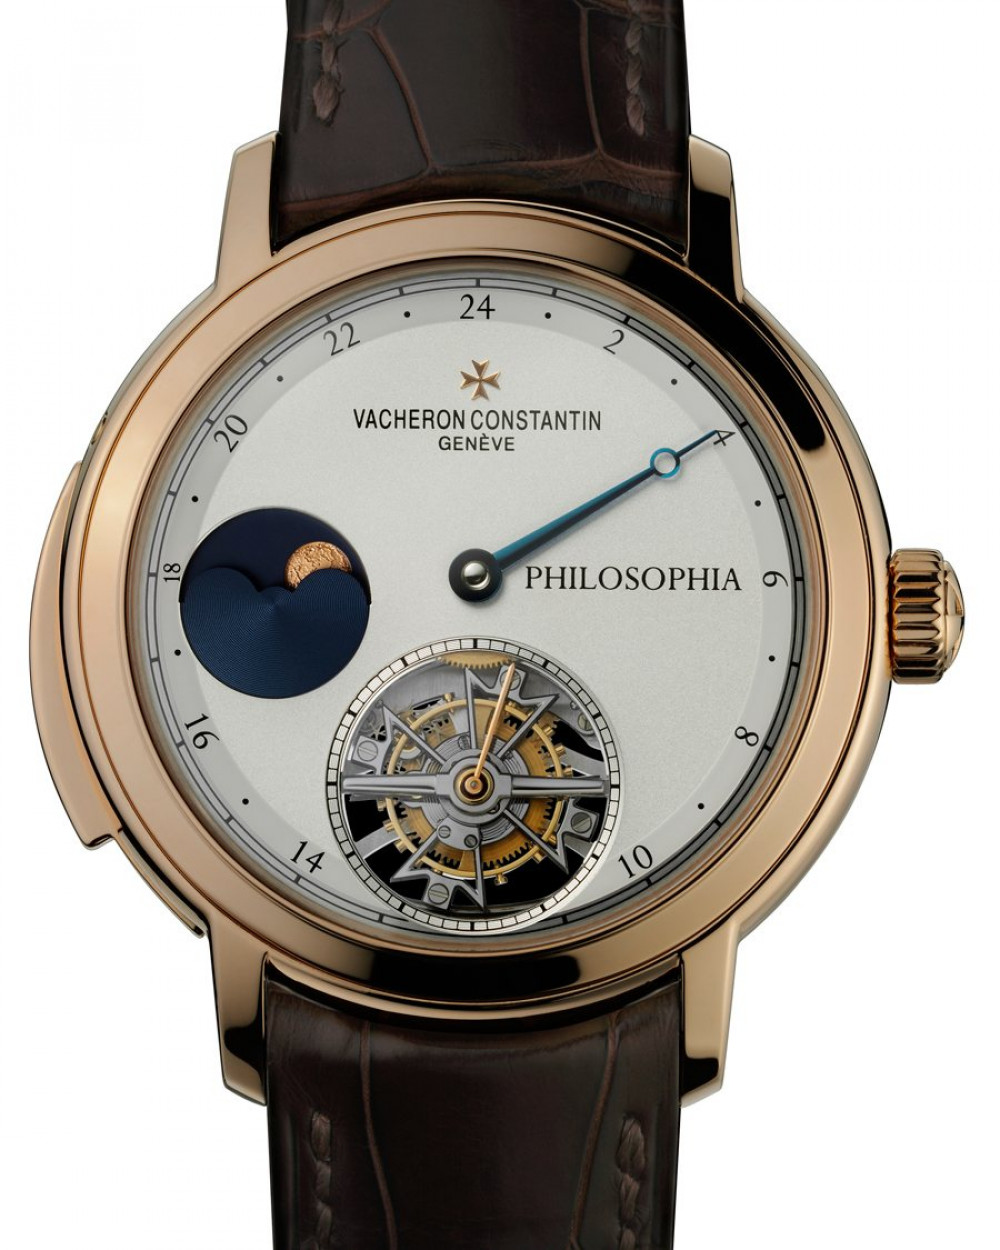 Zegarek firmy Vacheron Constantin, model Philosophia